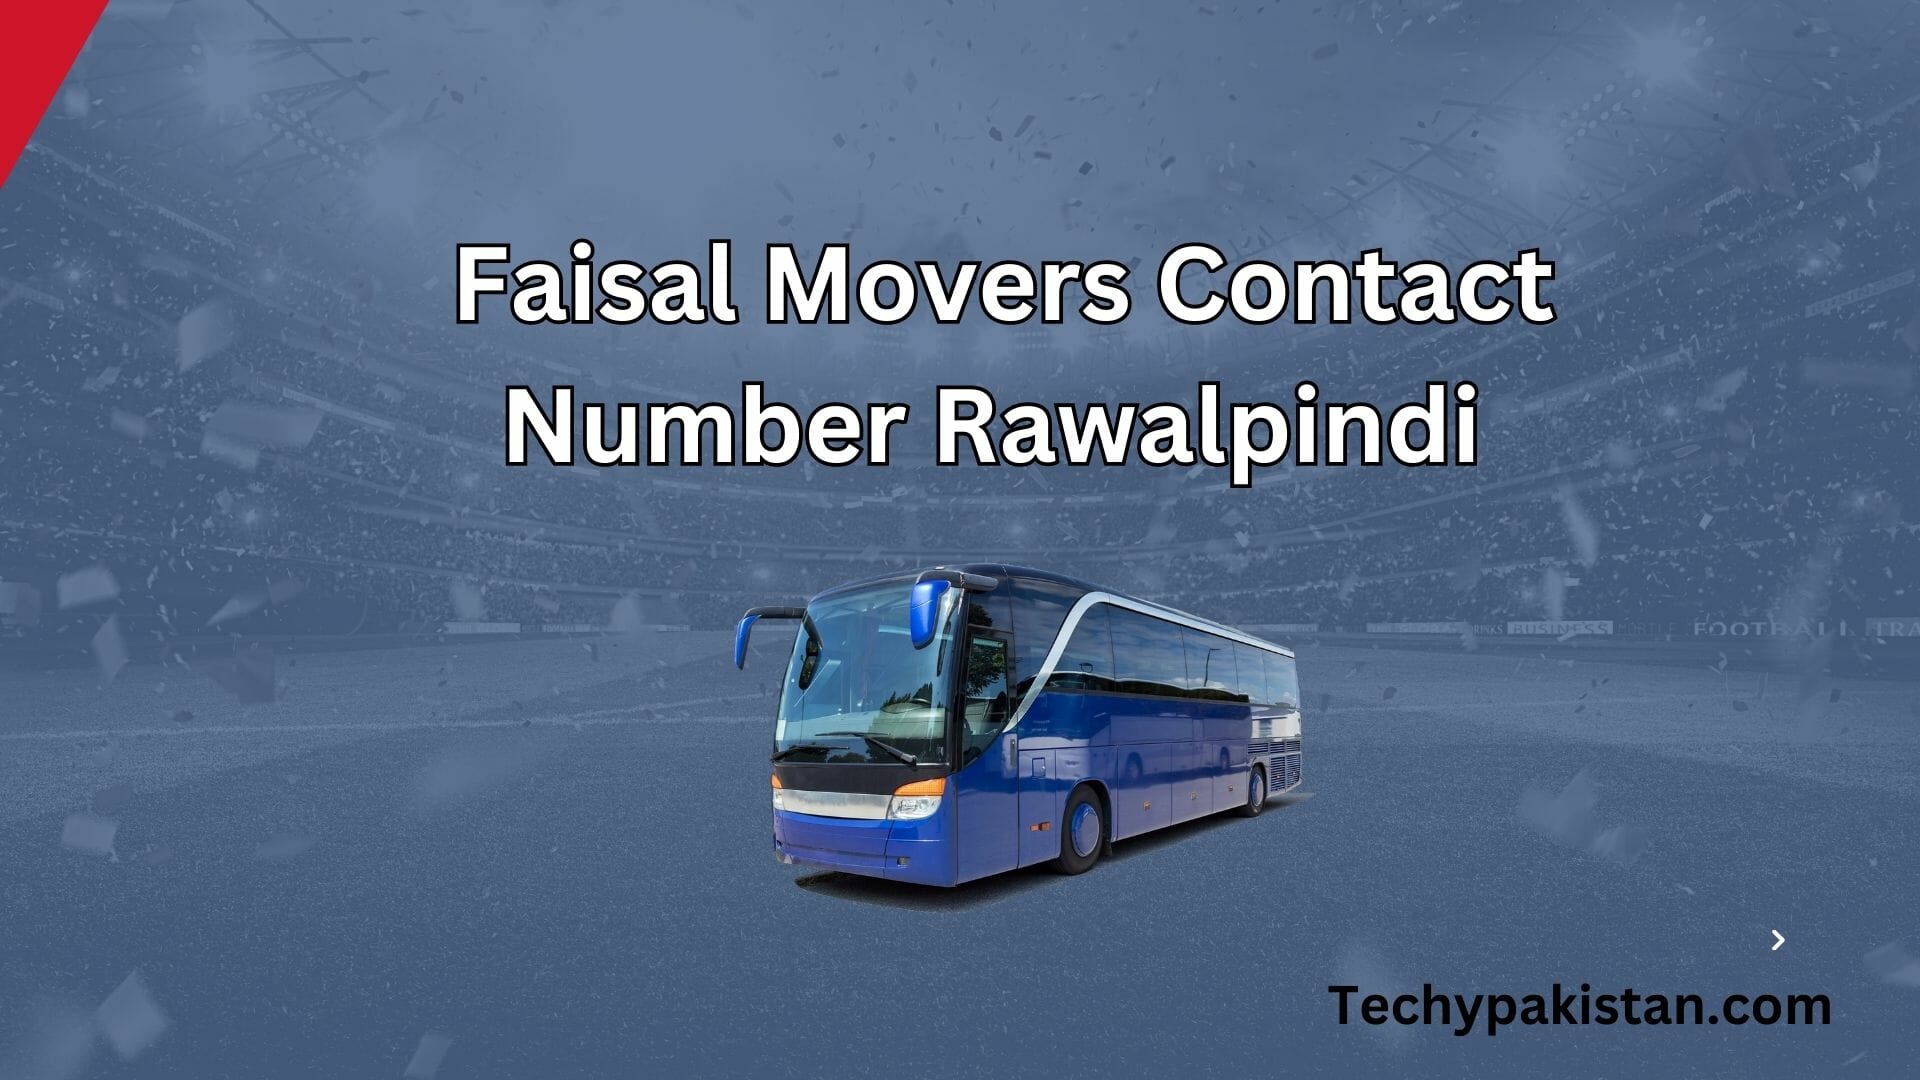 Faisal Movers Contact Number Rawalpindi - Reach Us Fast!